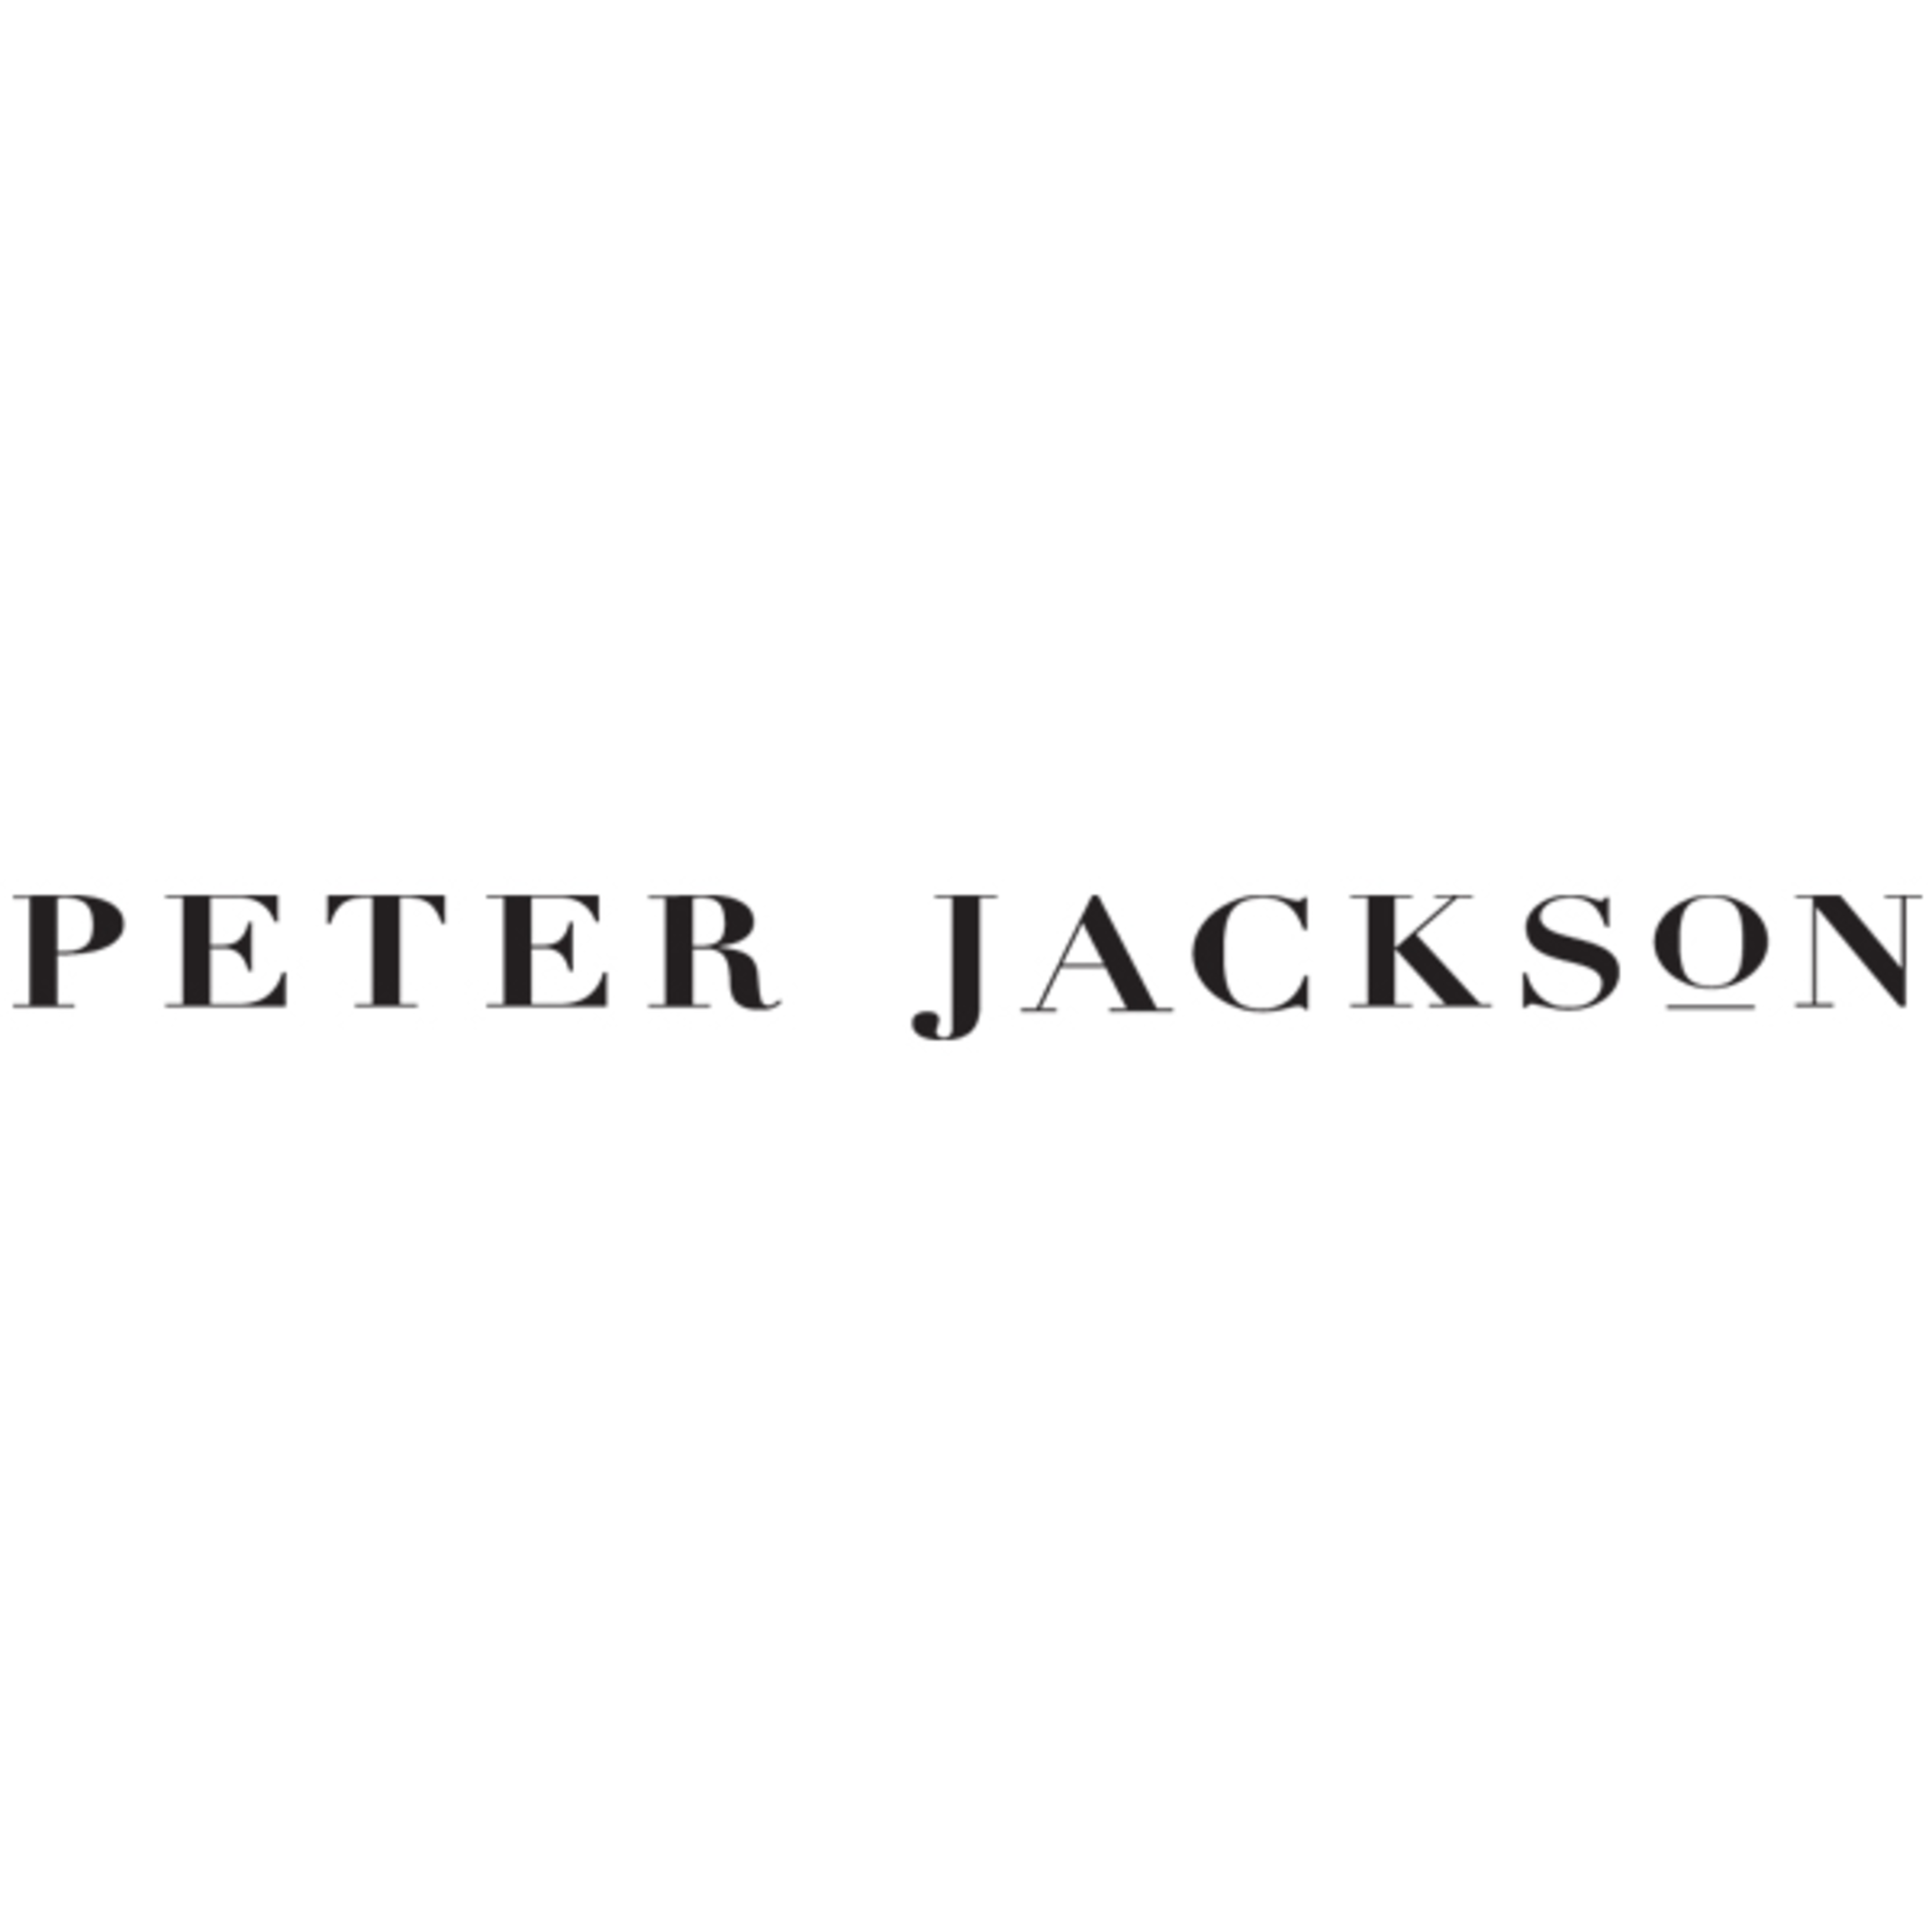 Peter Jackson Logo.webp